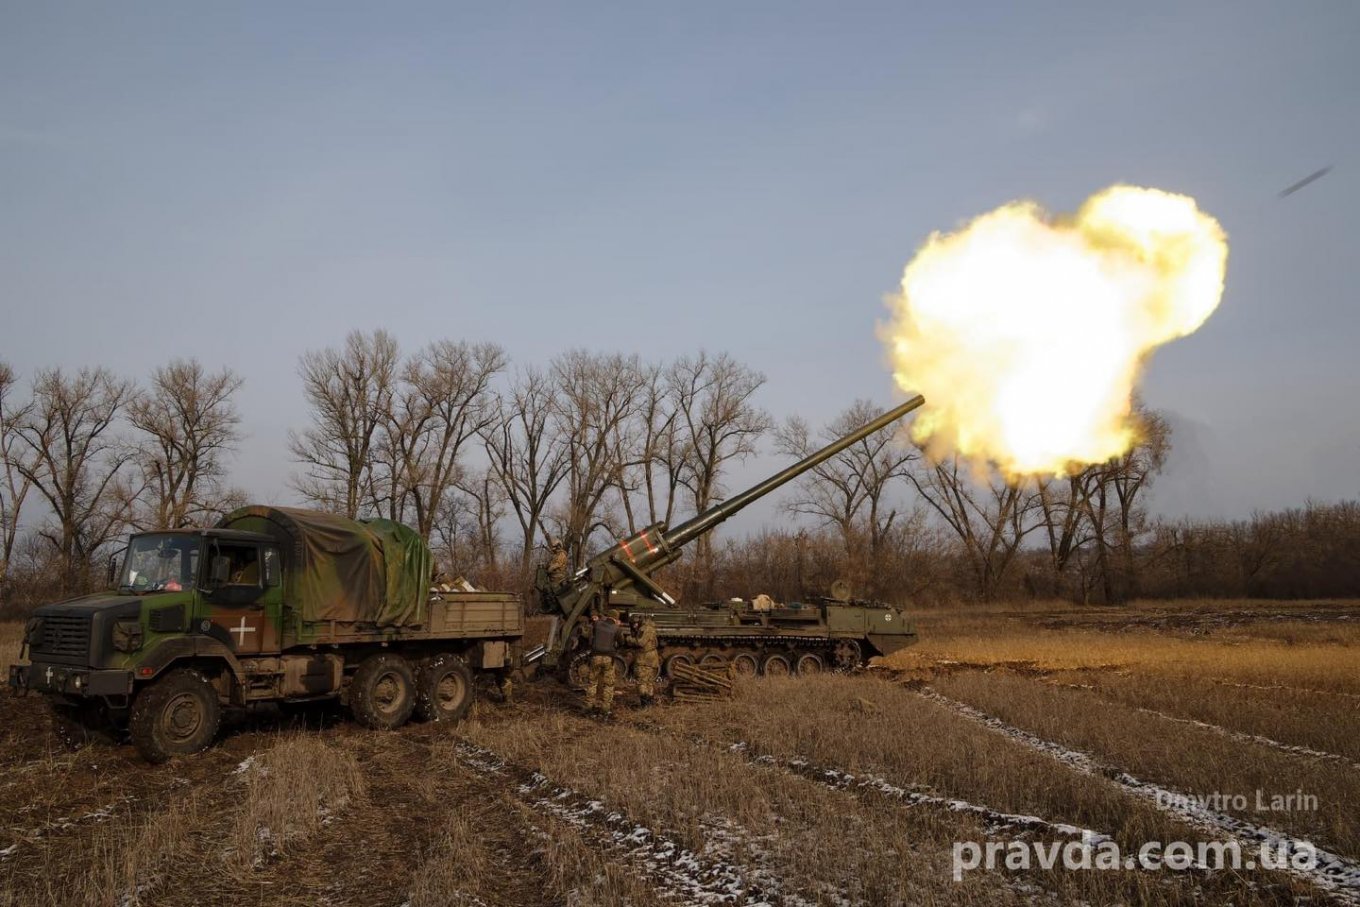 Ukraine's heavy artillery eliminate next batch of occupiers, Defense Express